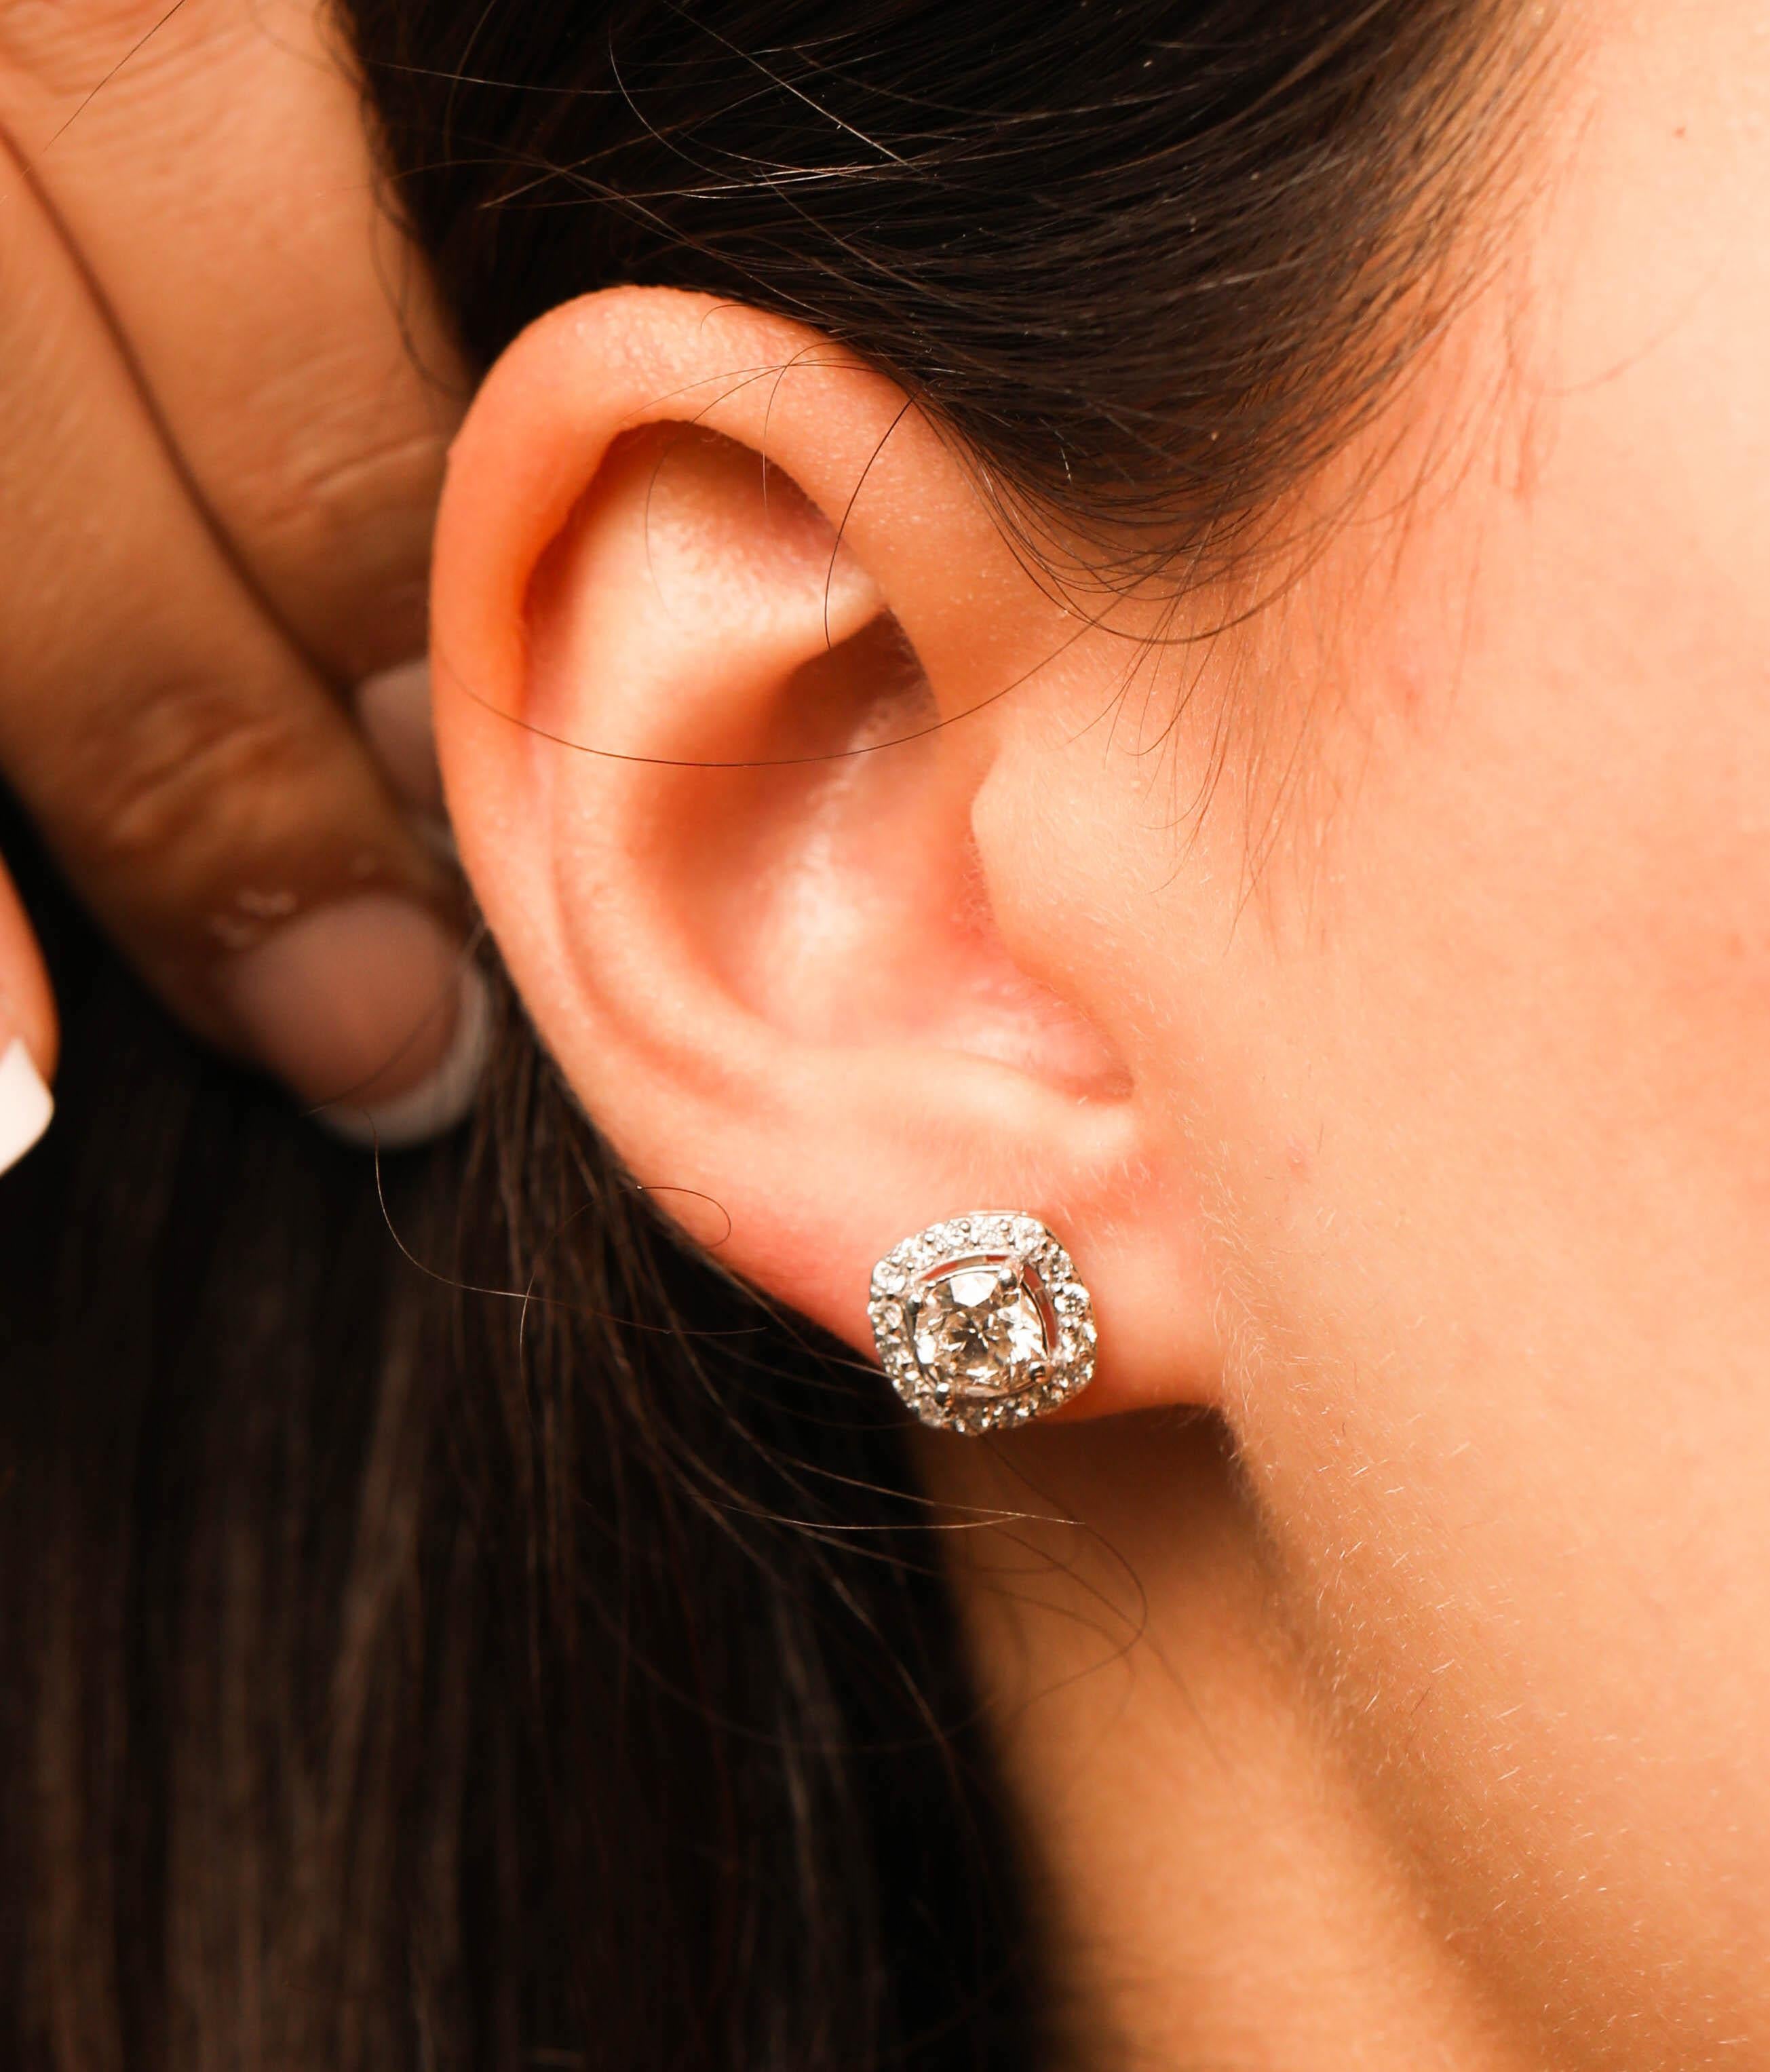 isabella m earrings